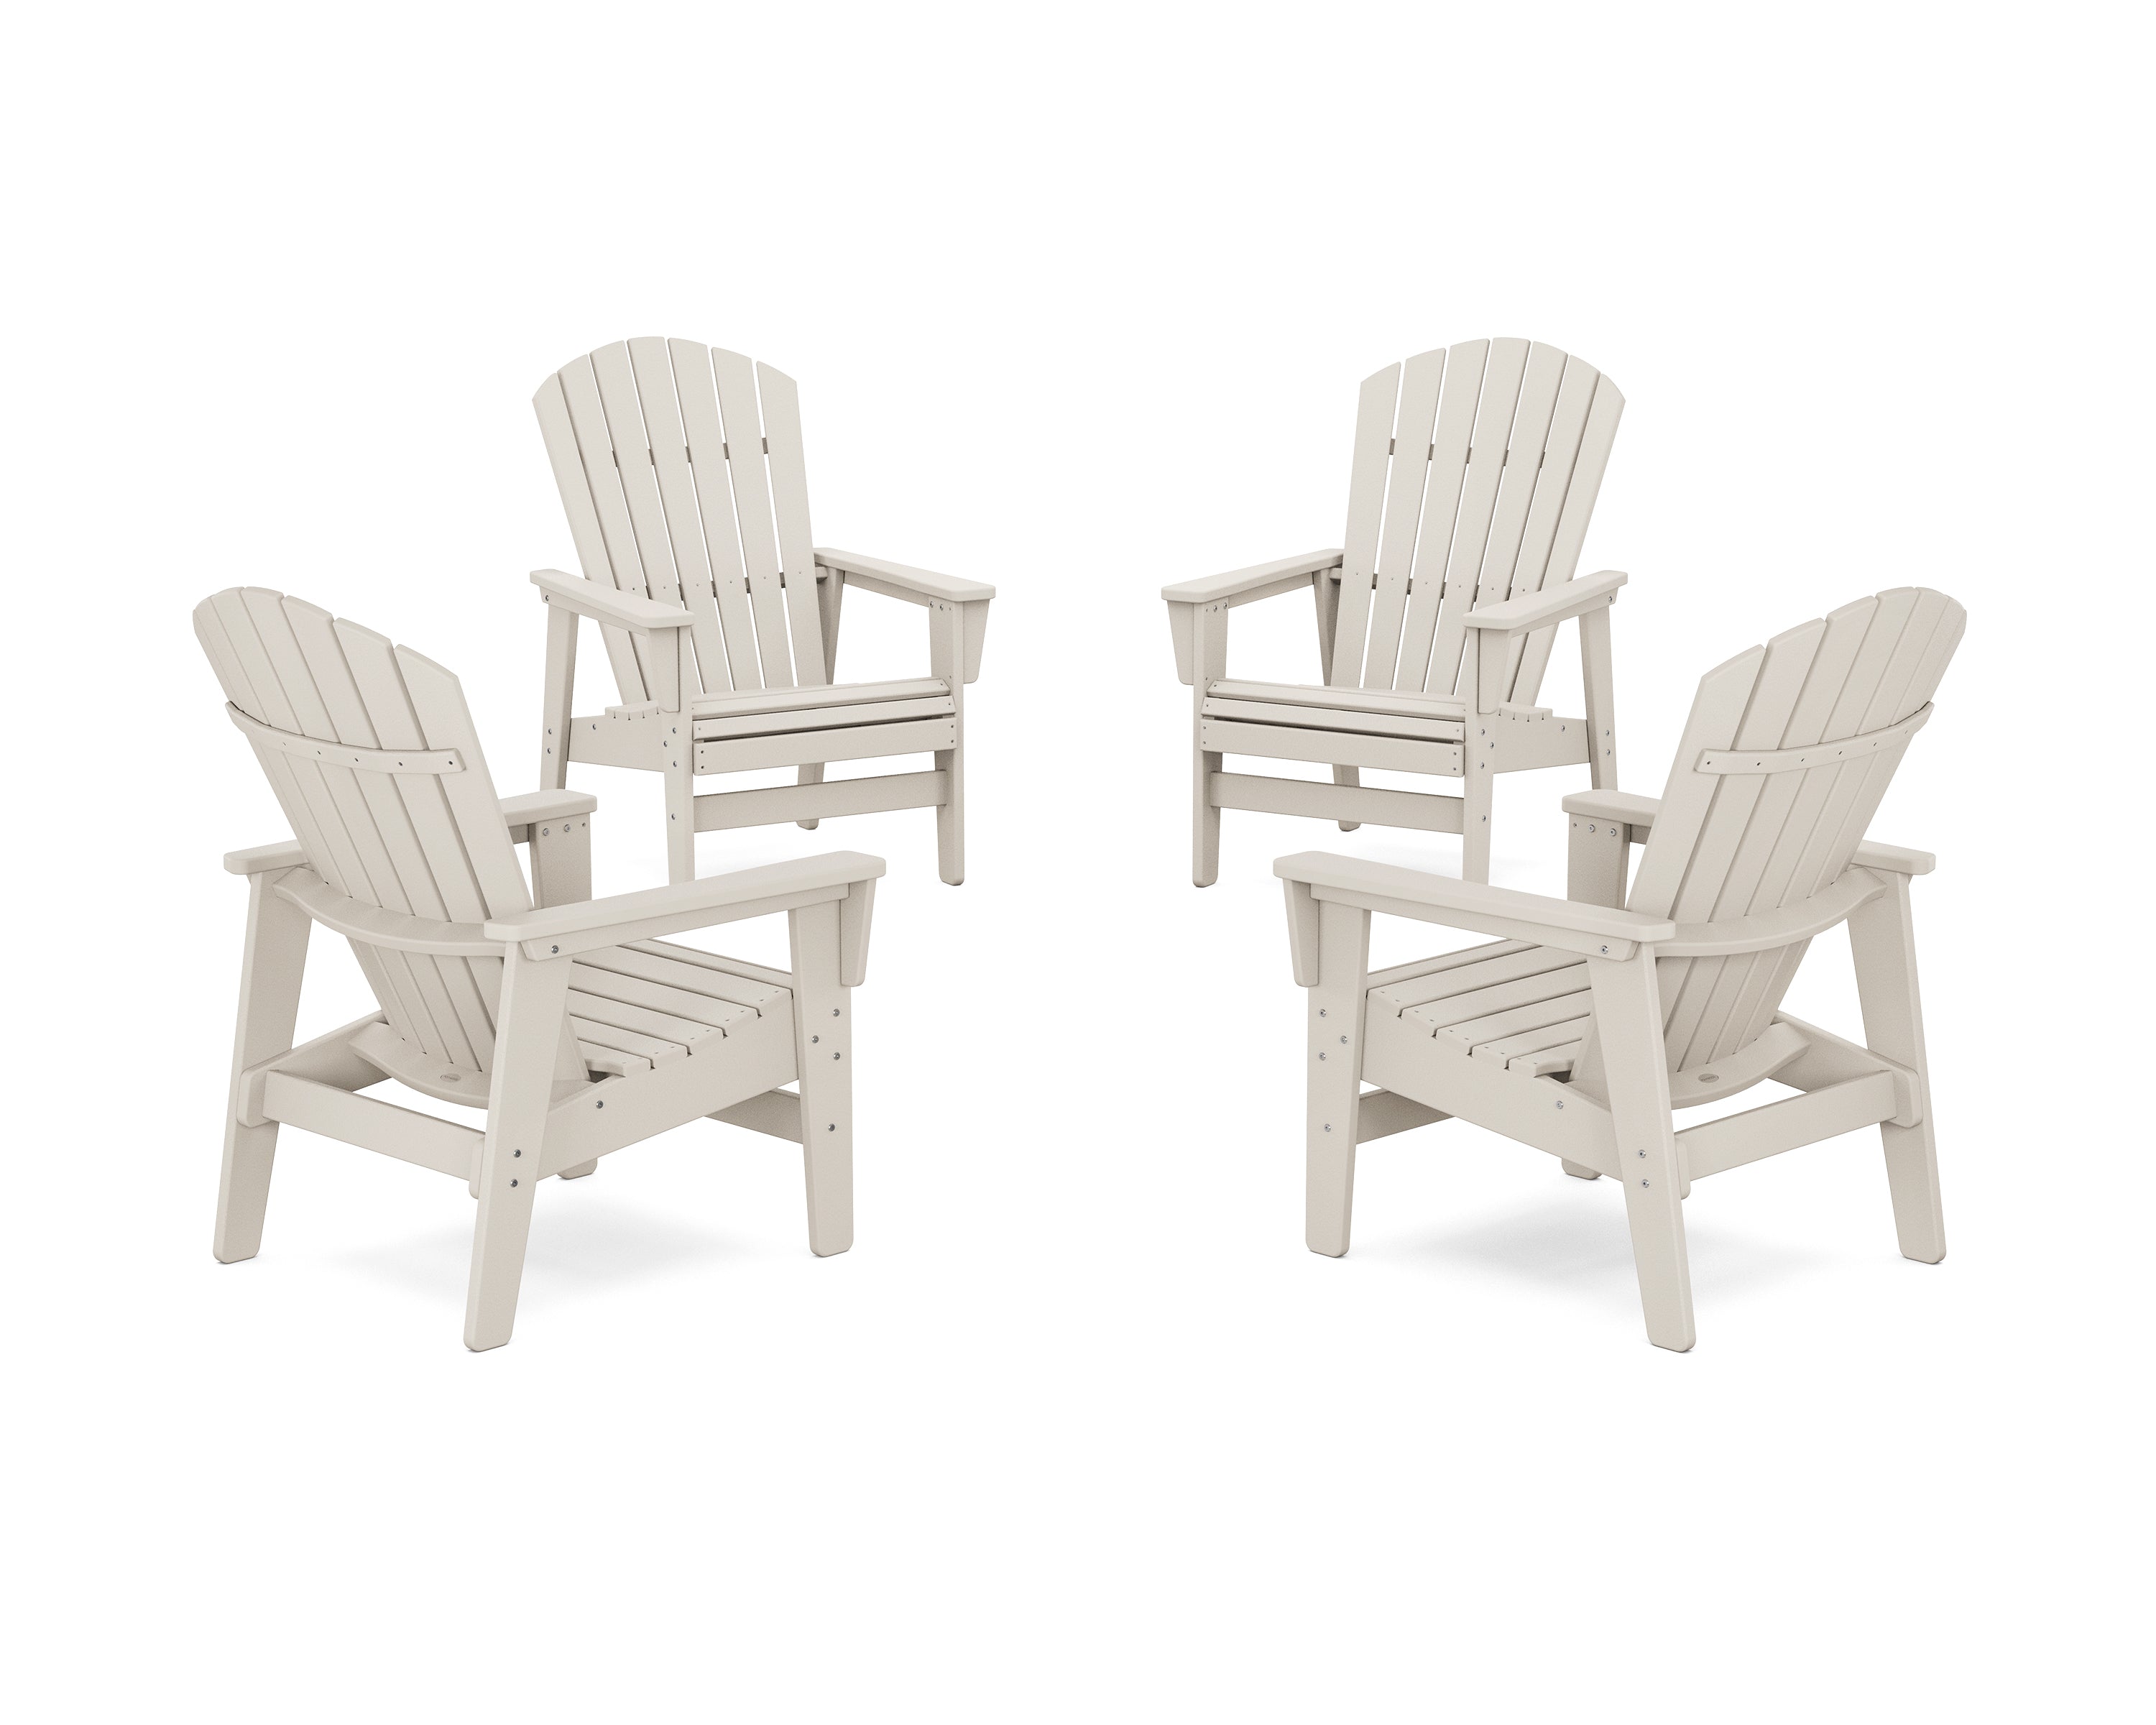 POLYWOOD® 4-Piece Nautical Grand Upright Adirondack Chair Conversation Set in Sand